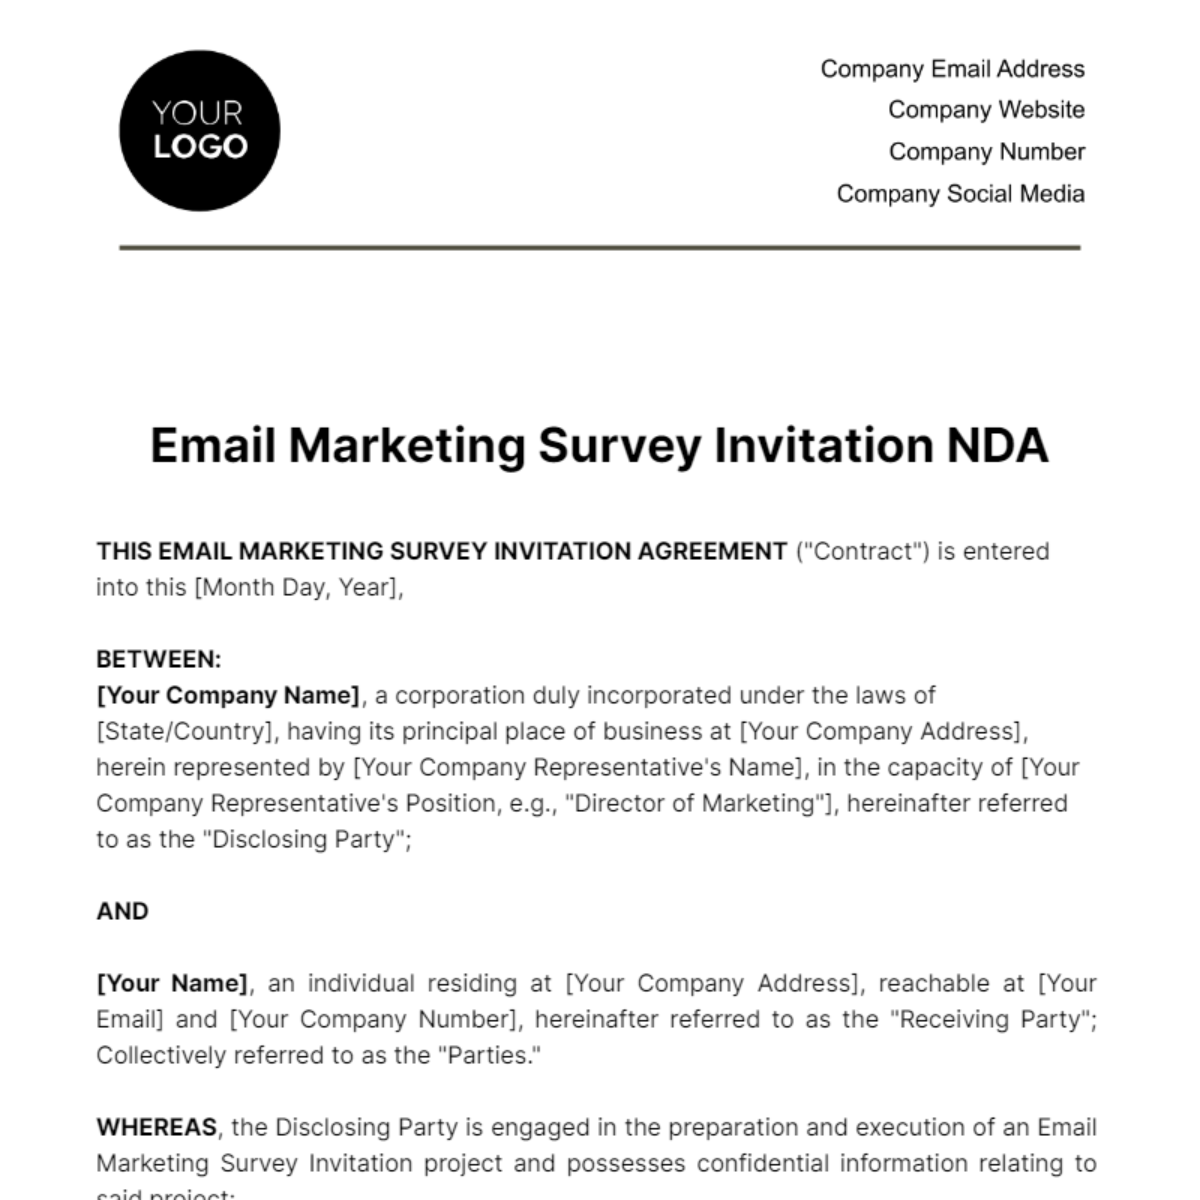 Email Marketing Survey Invitation NDA Template